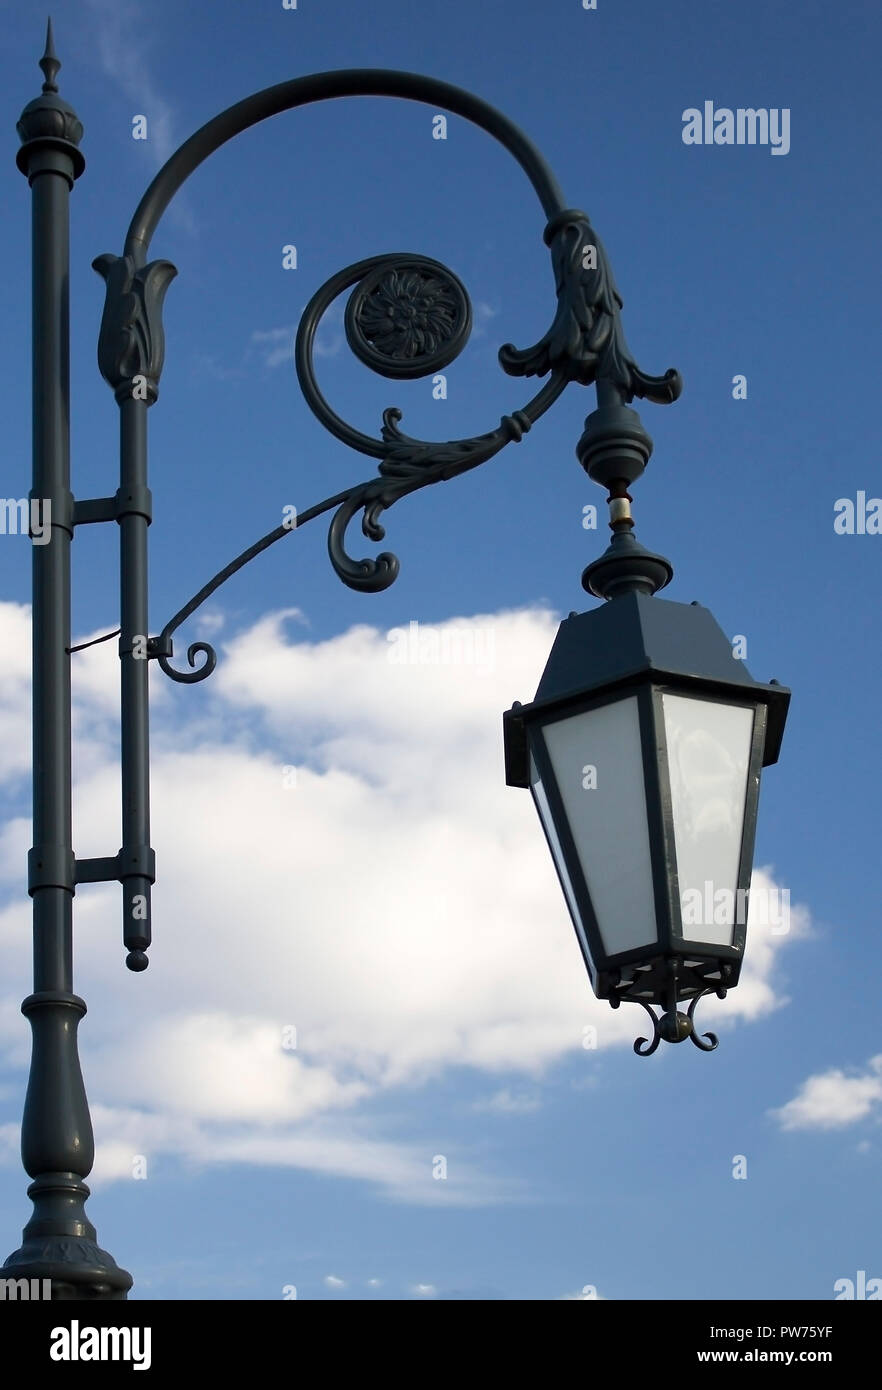 One street vintage city lamp or lantern Stock Photo